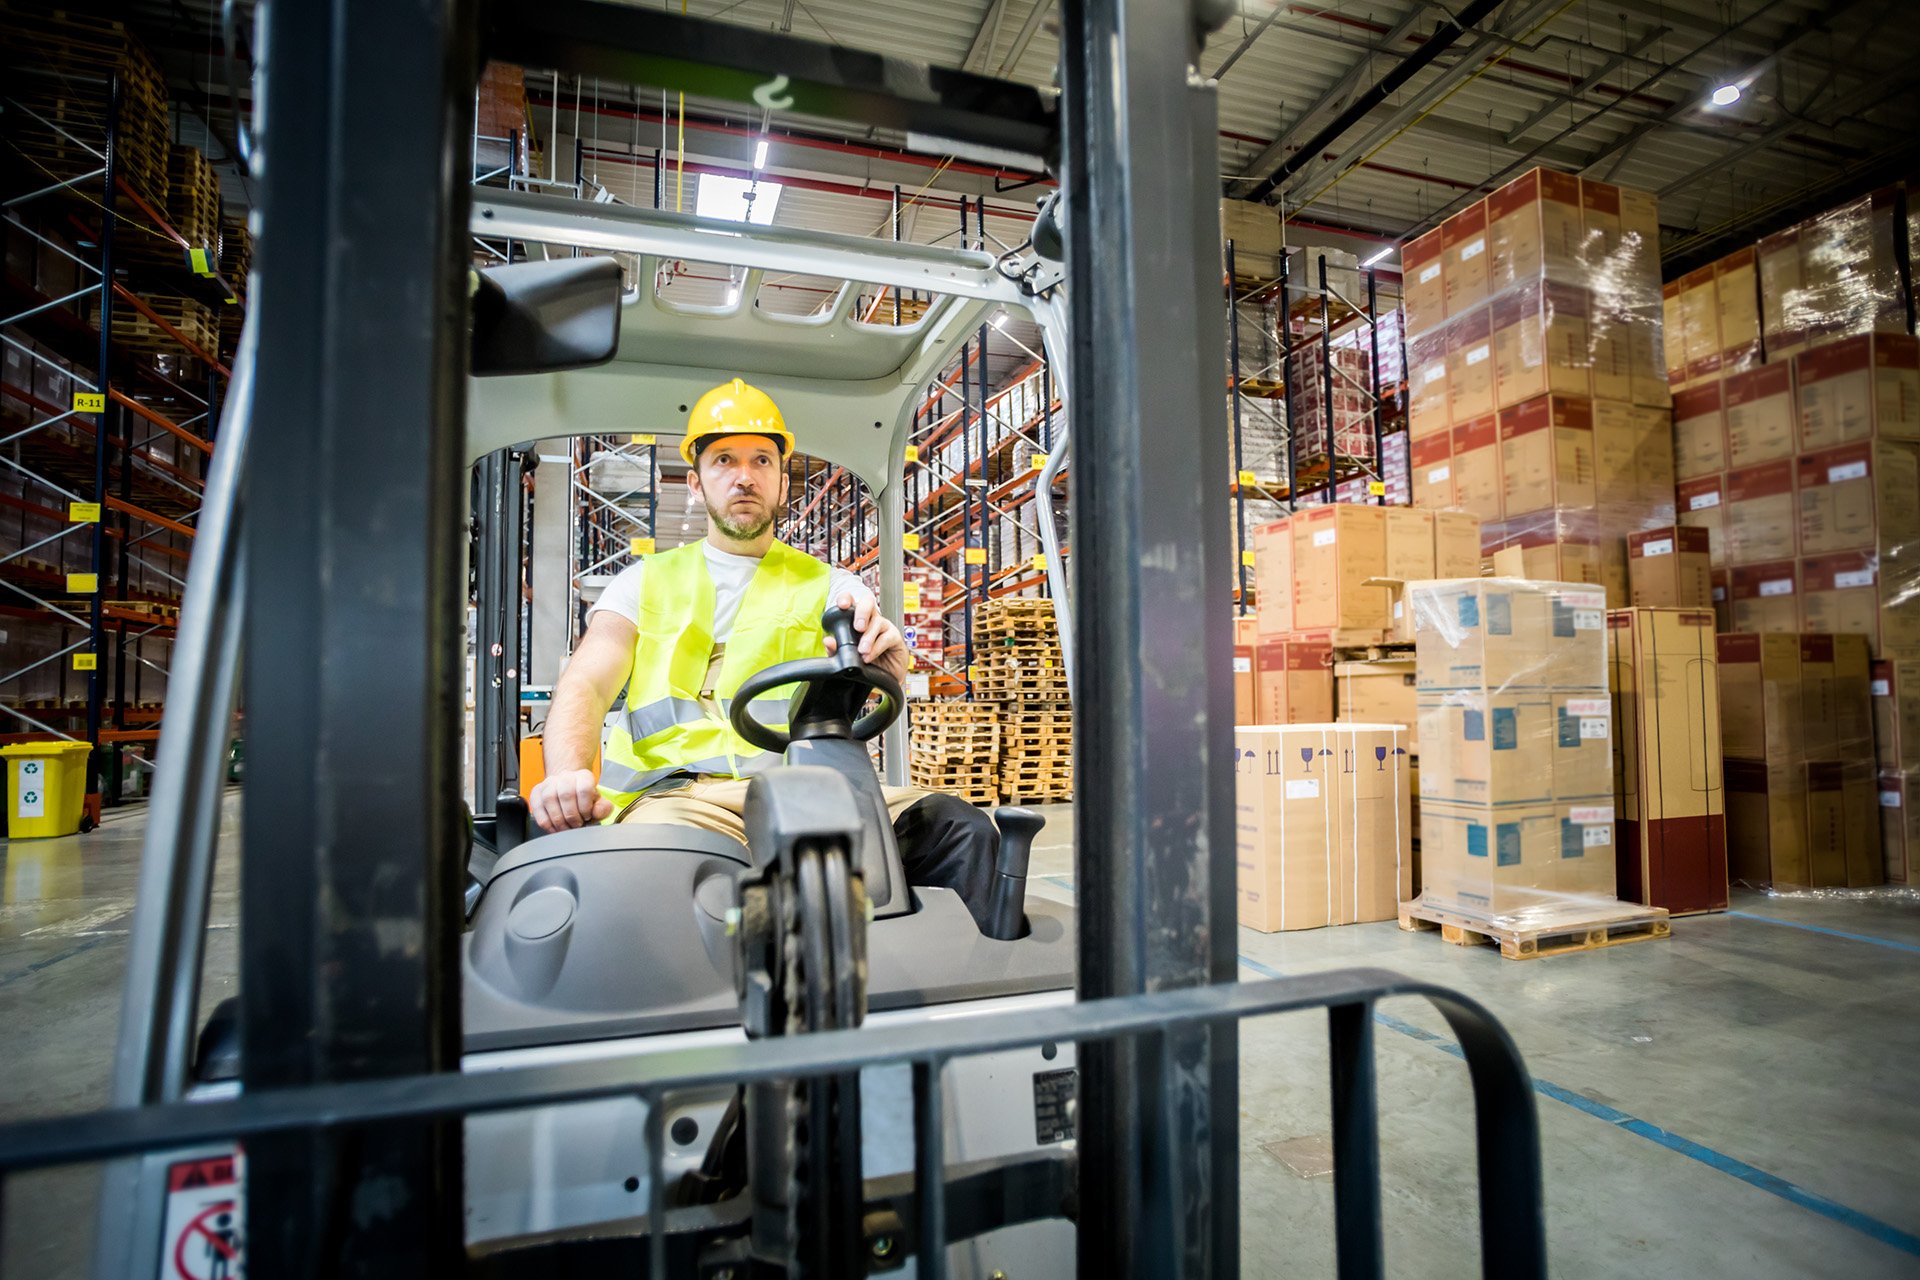 forklift-operator-during-work-in-large-warehouse-2021-08-29-22-34-36-utc